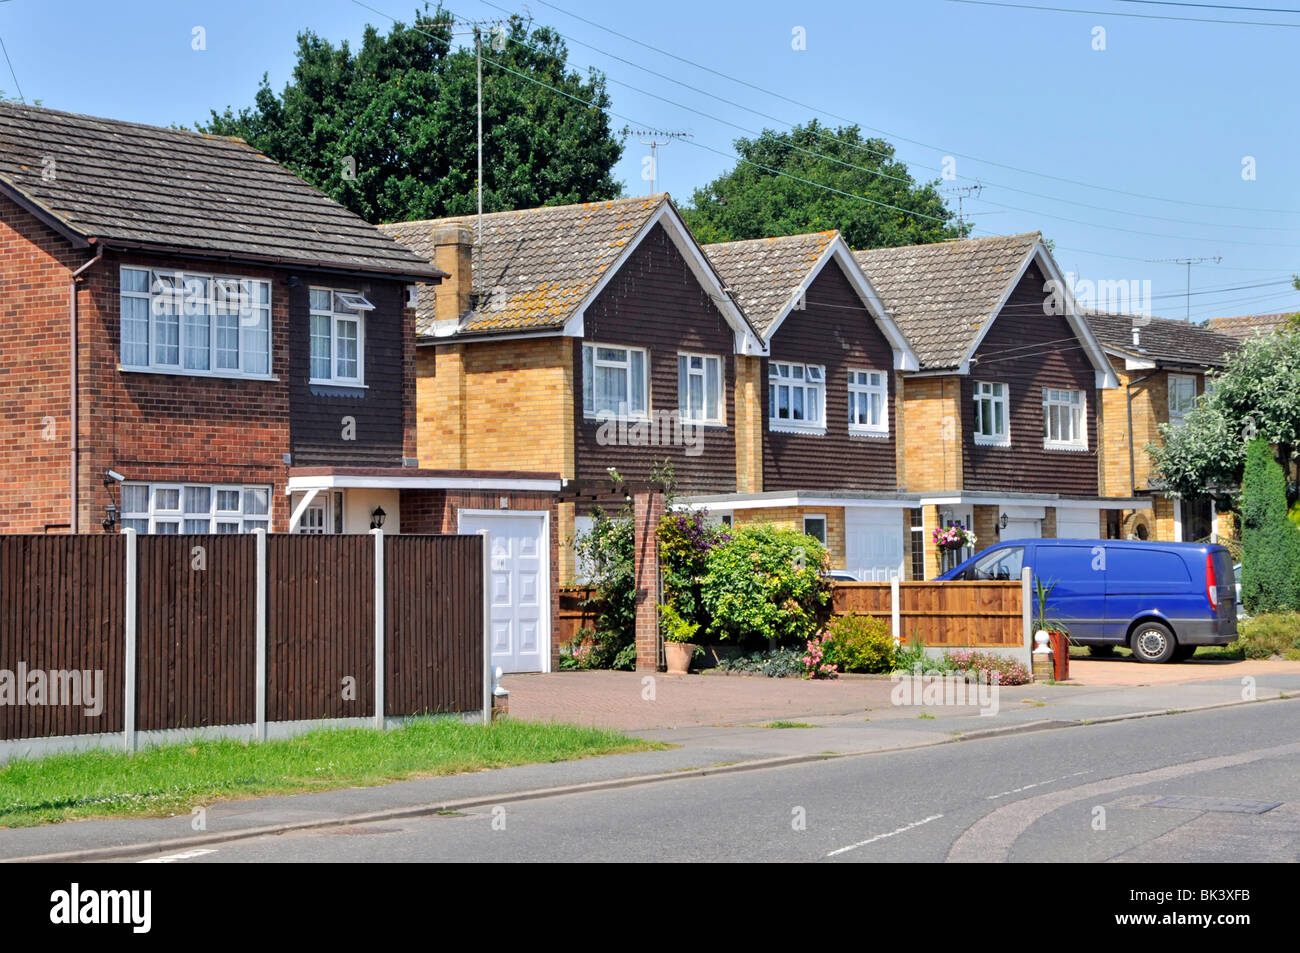 Houses in residential street Stock Photo